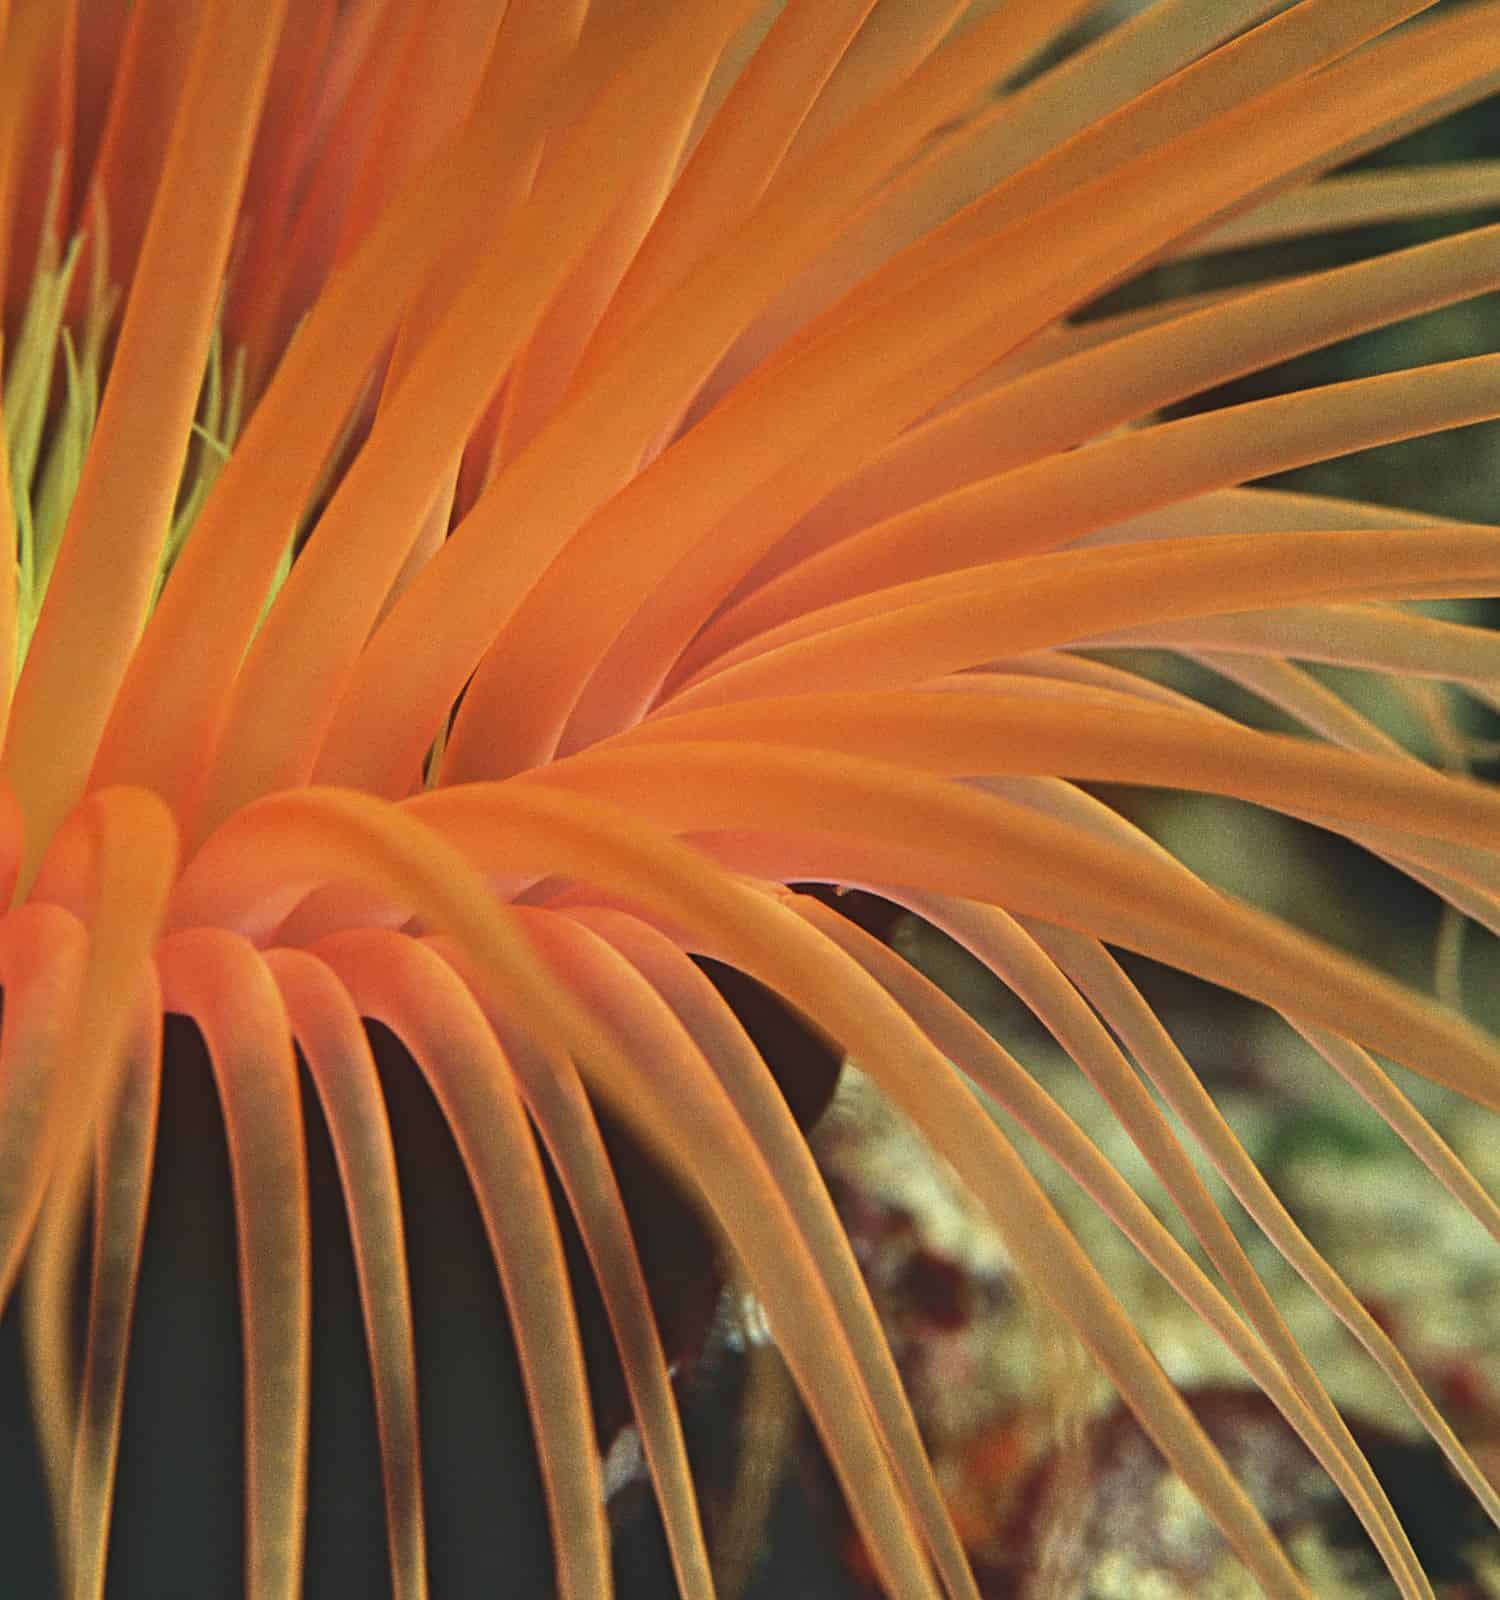 Orange tube anemone, close-up